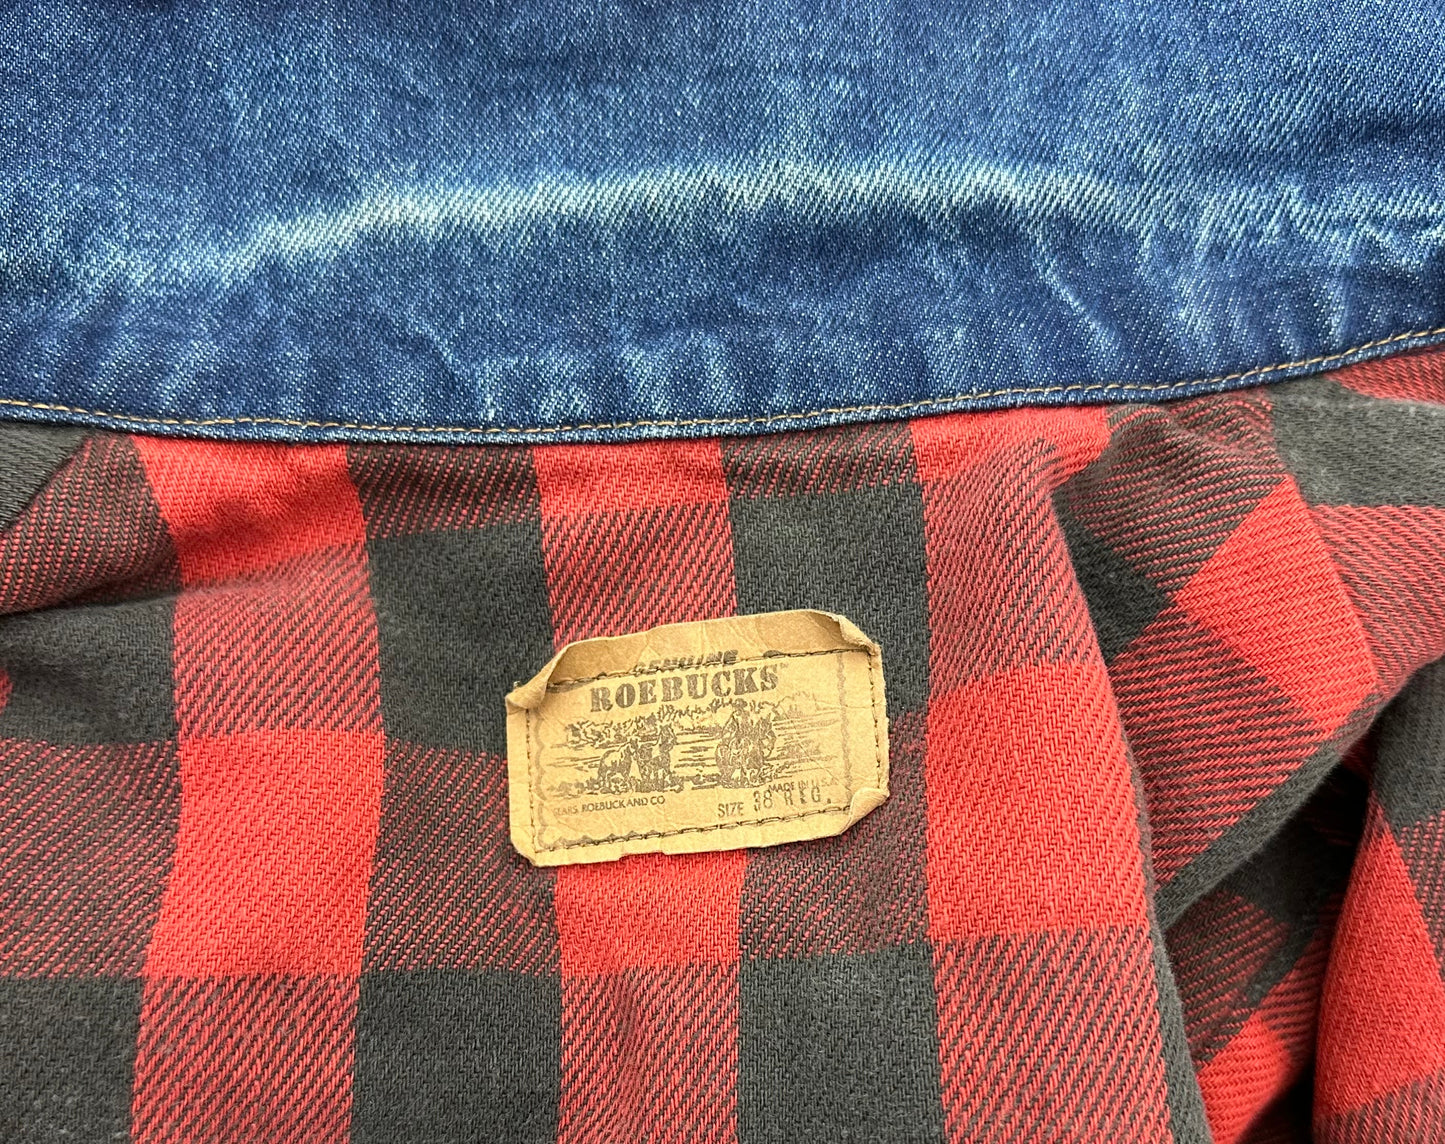 1980s Denim Jacket with Red and Black Plaid Lining, Roebucks Size Medium, Sears